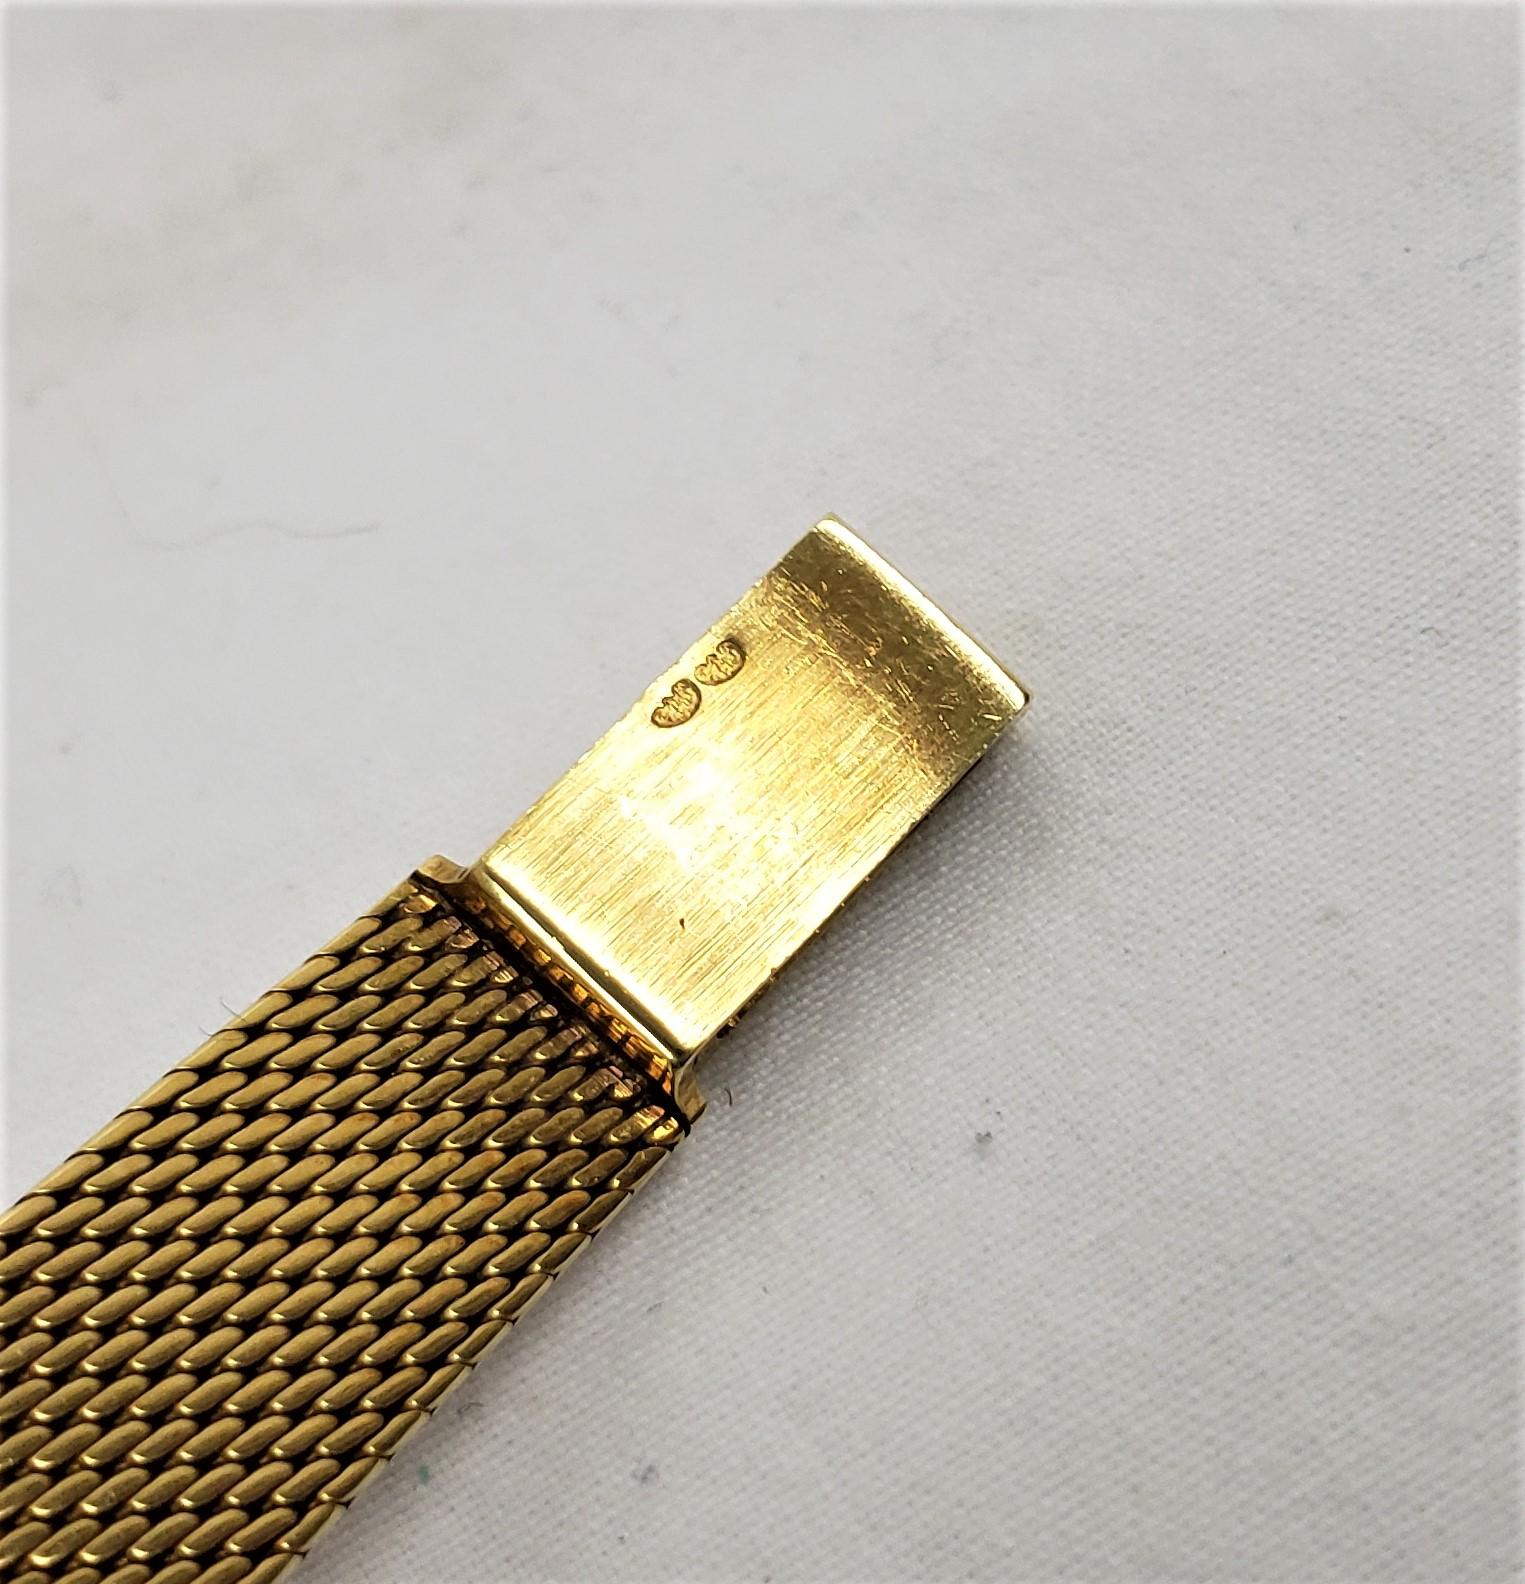 Baume Mercier 18 Karat Yellow Gold Ladies Wristwatch & Bracelet & Original Box For Sale 6